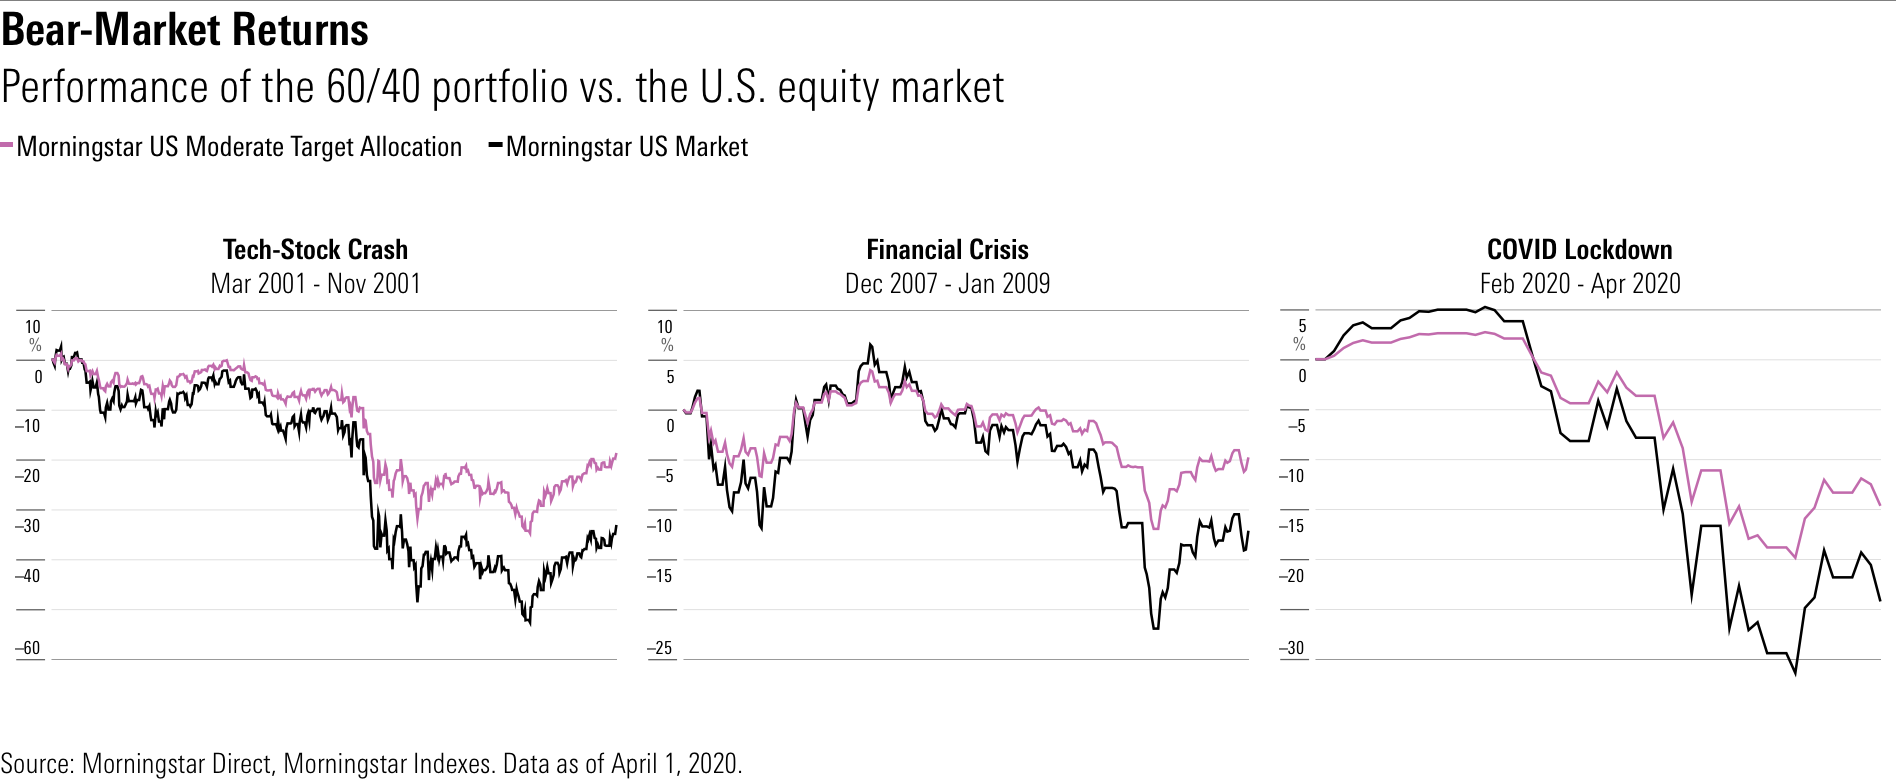 Performance of the 60/40 portfolio vs. the U.S. equity market.